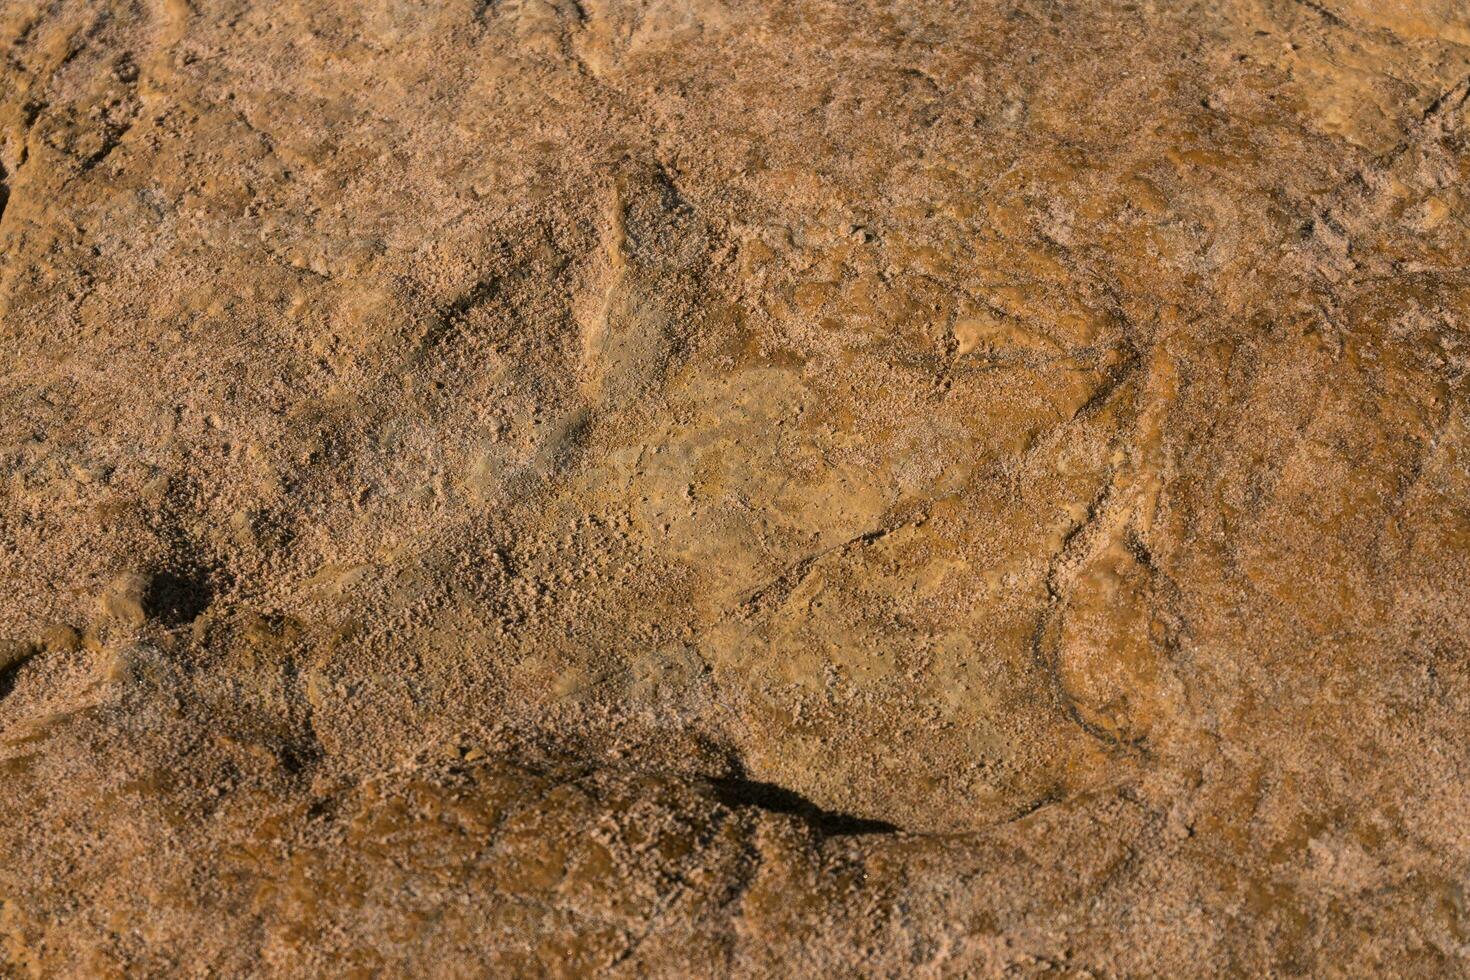 Dinosaur footprints on stone photo